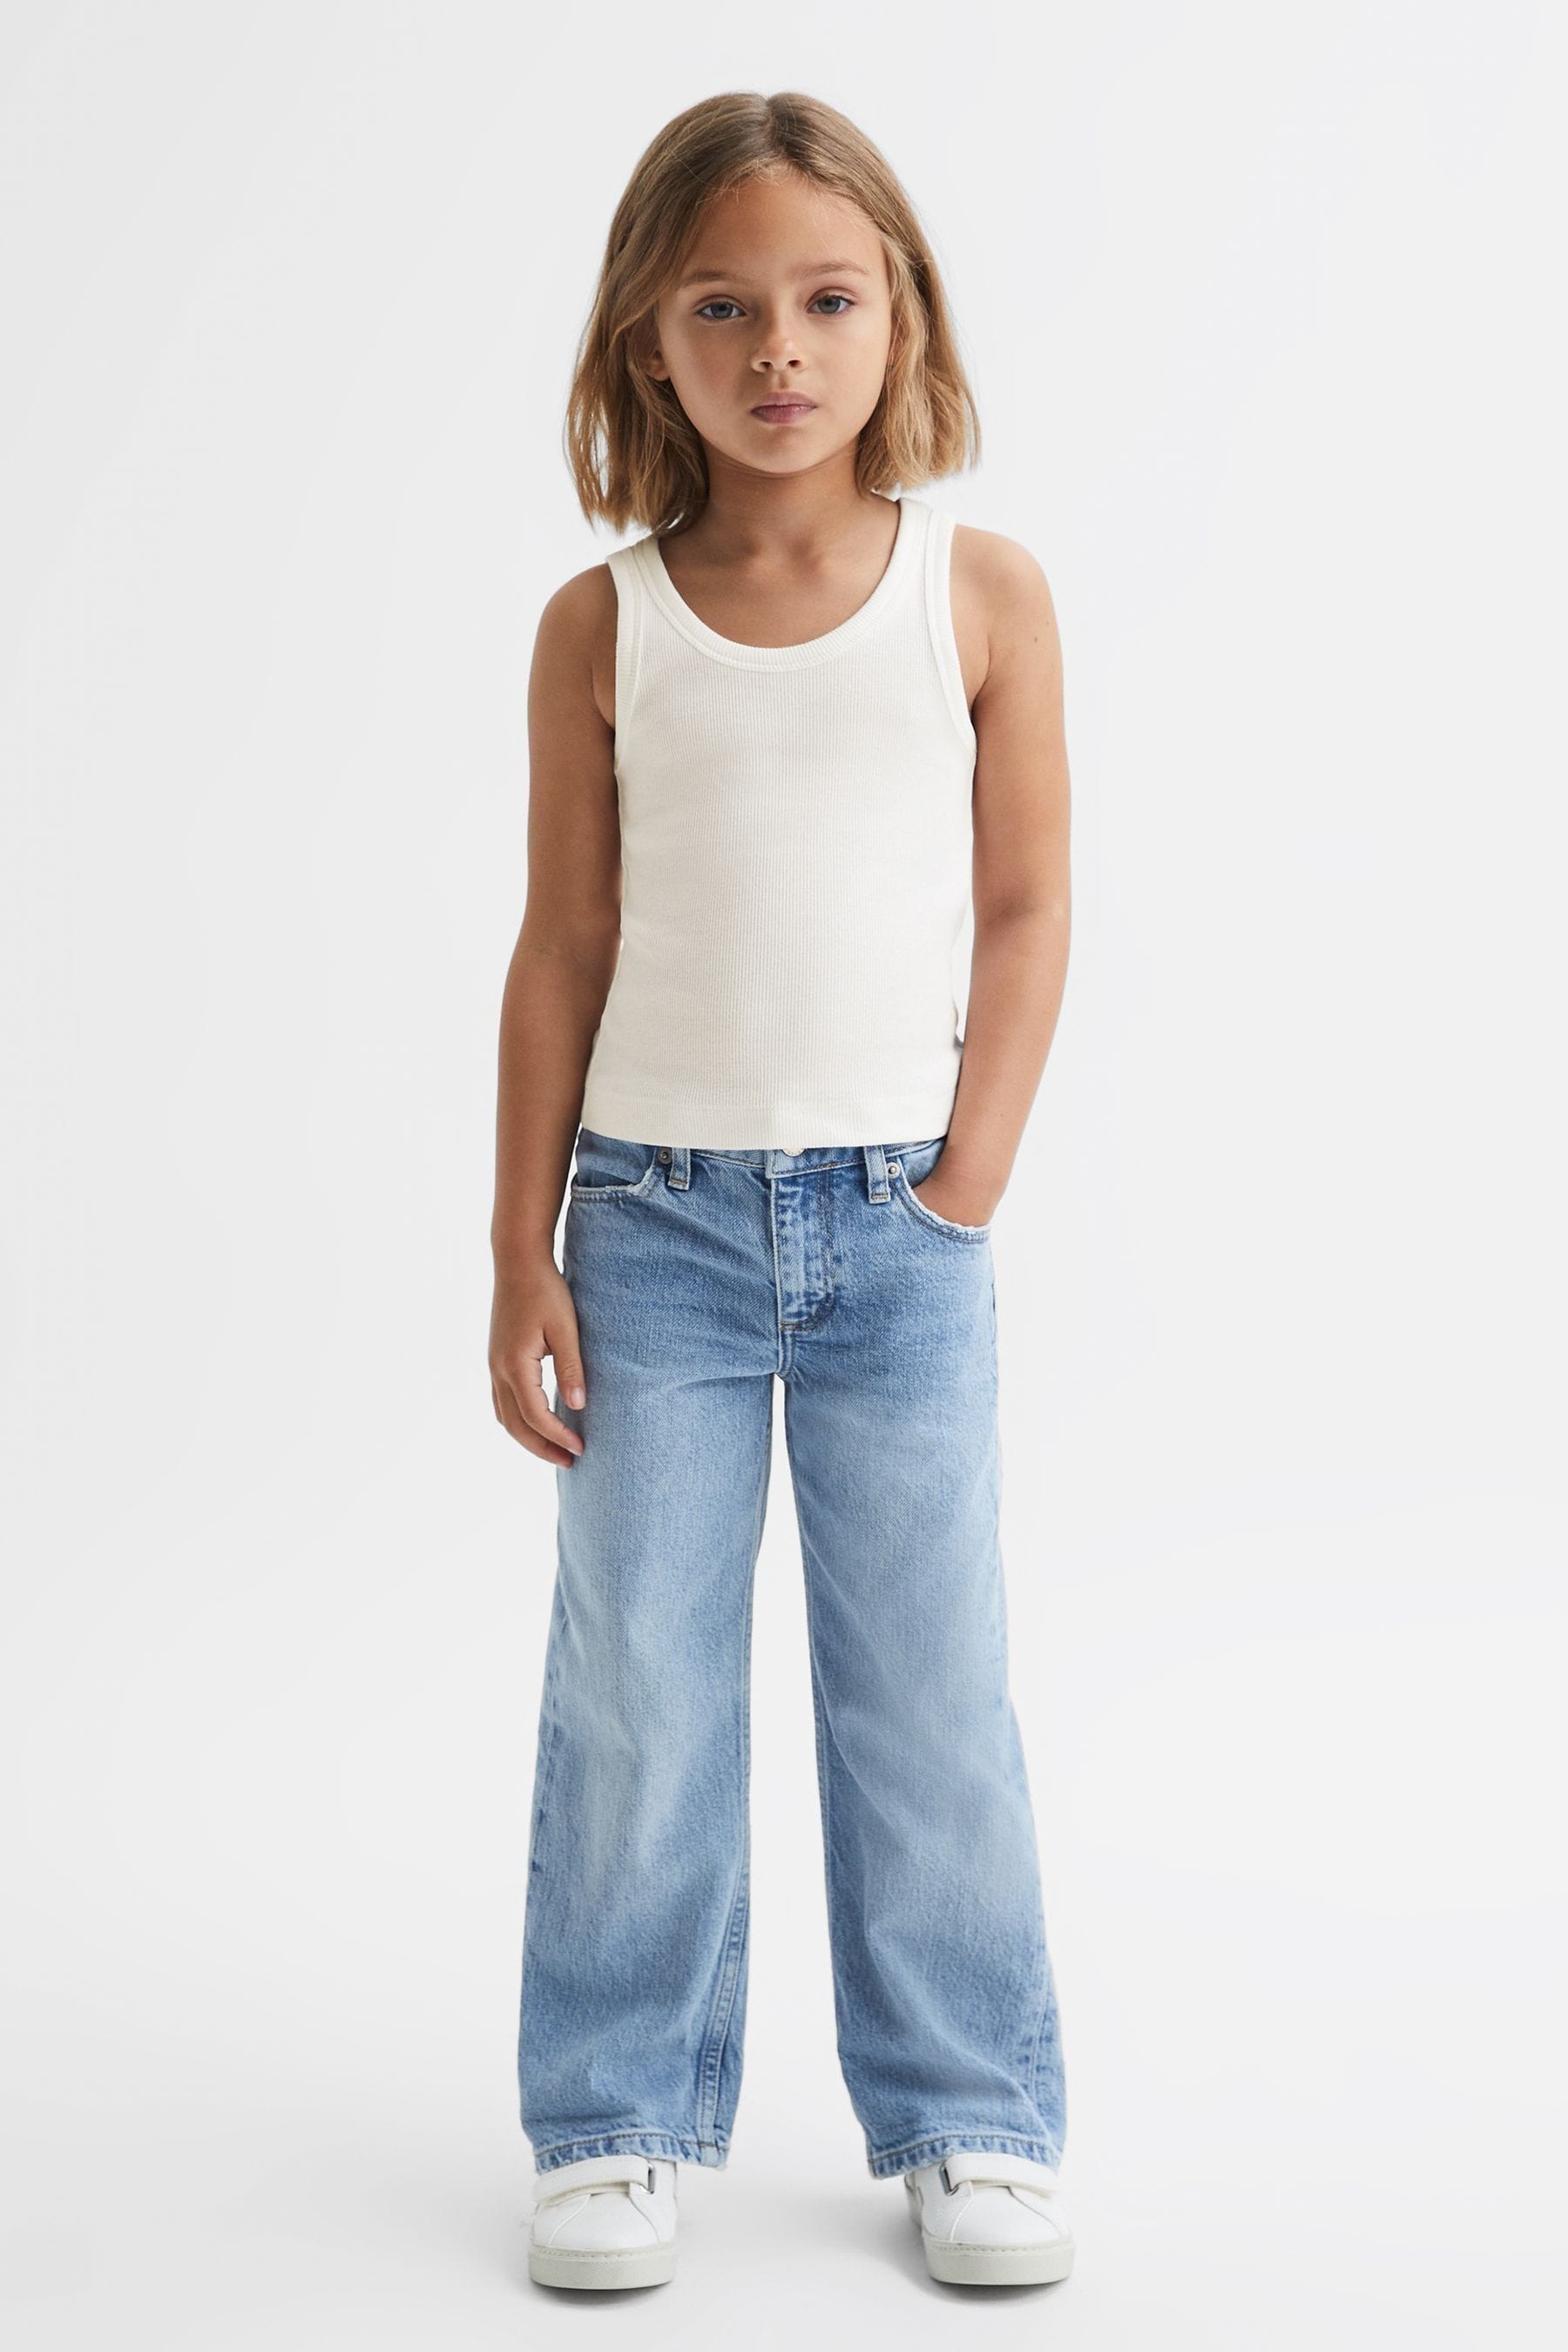 Reiss Kids' Violet - White Junior Cotton Blend Ribbed Vest, 6 - 7 Years